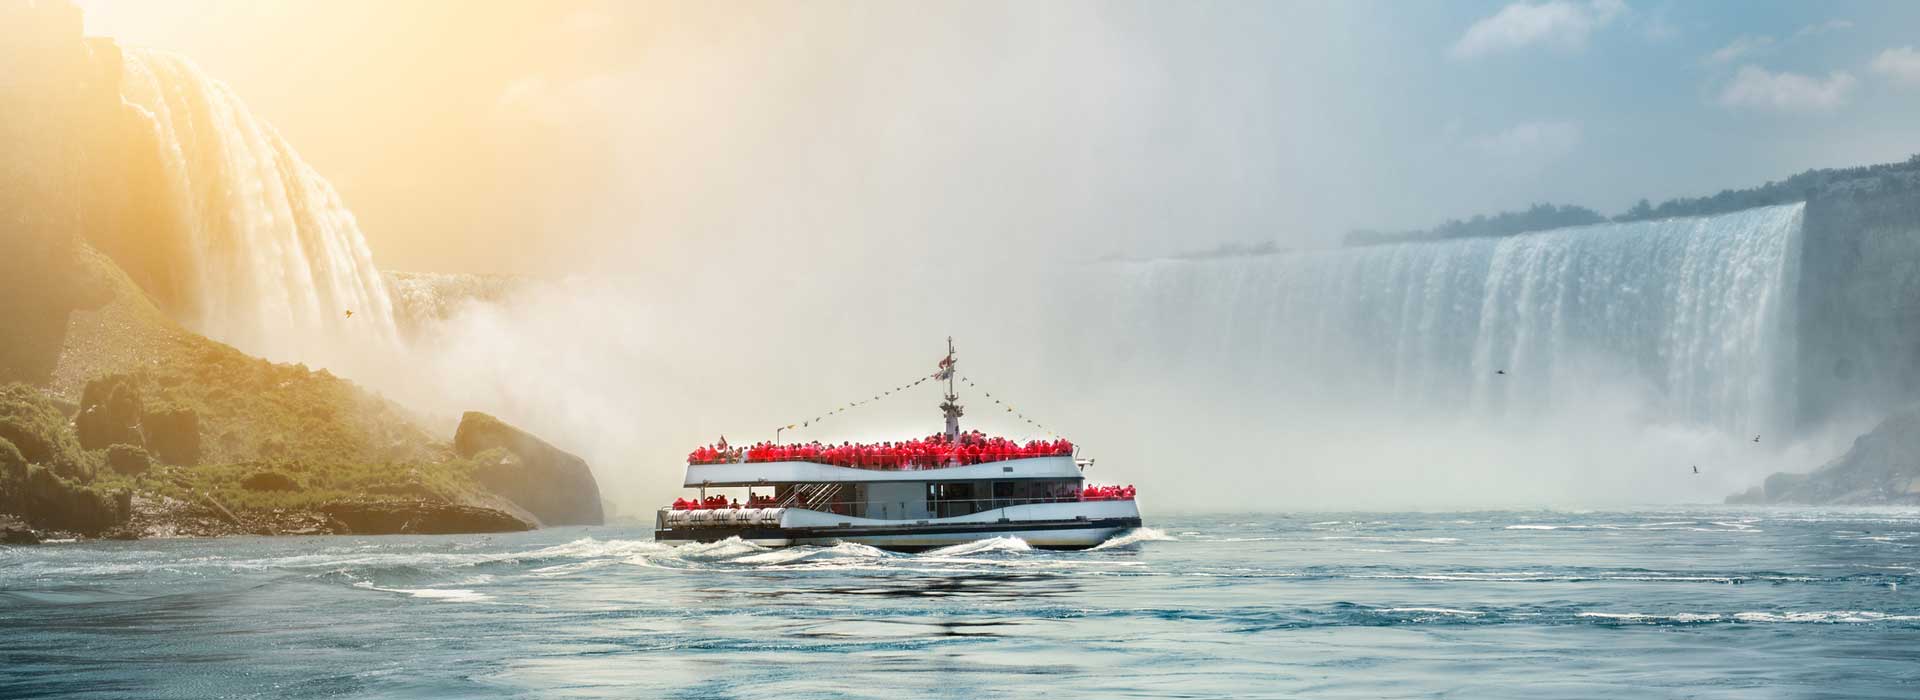 canada boat tour